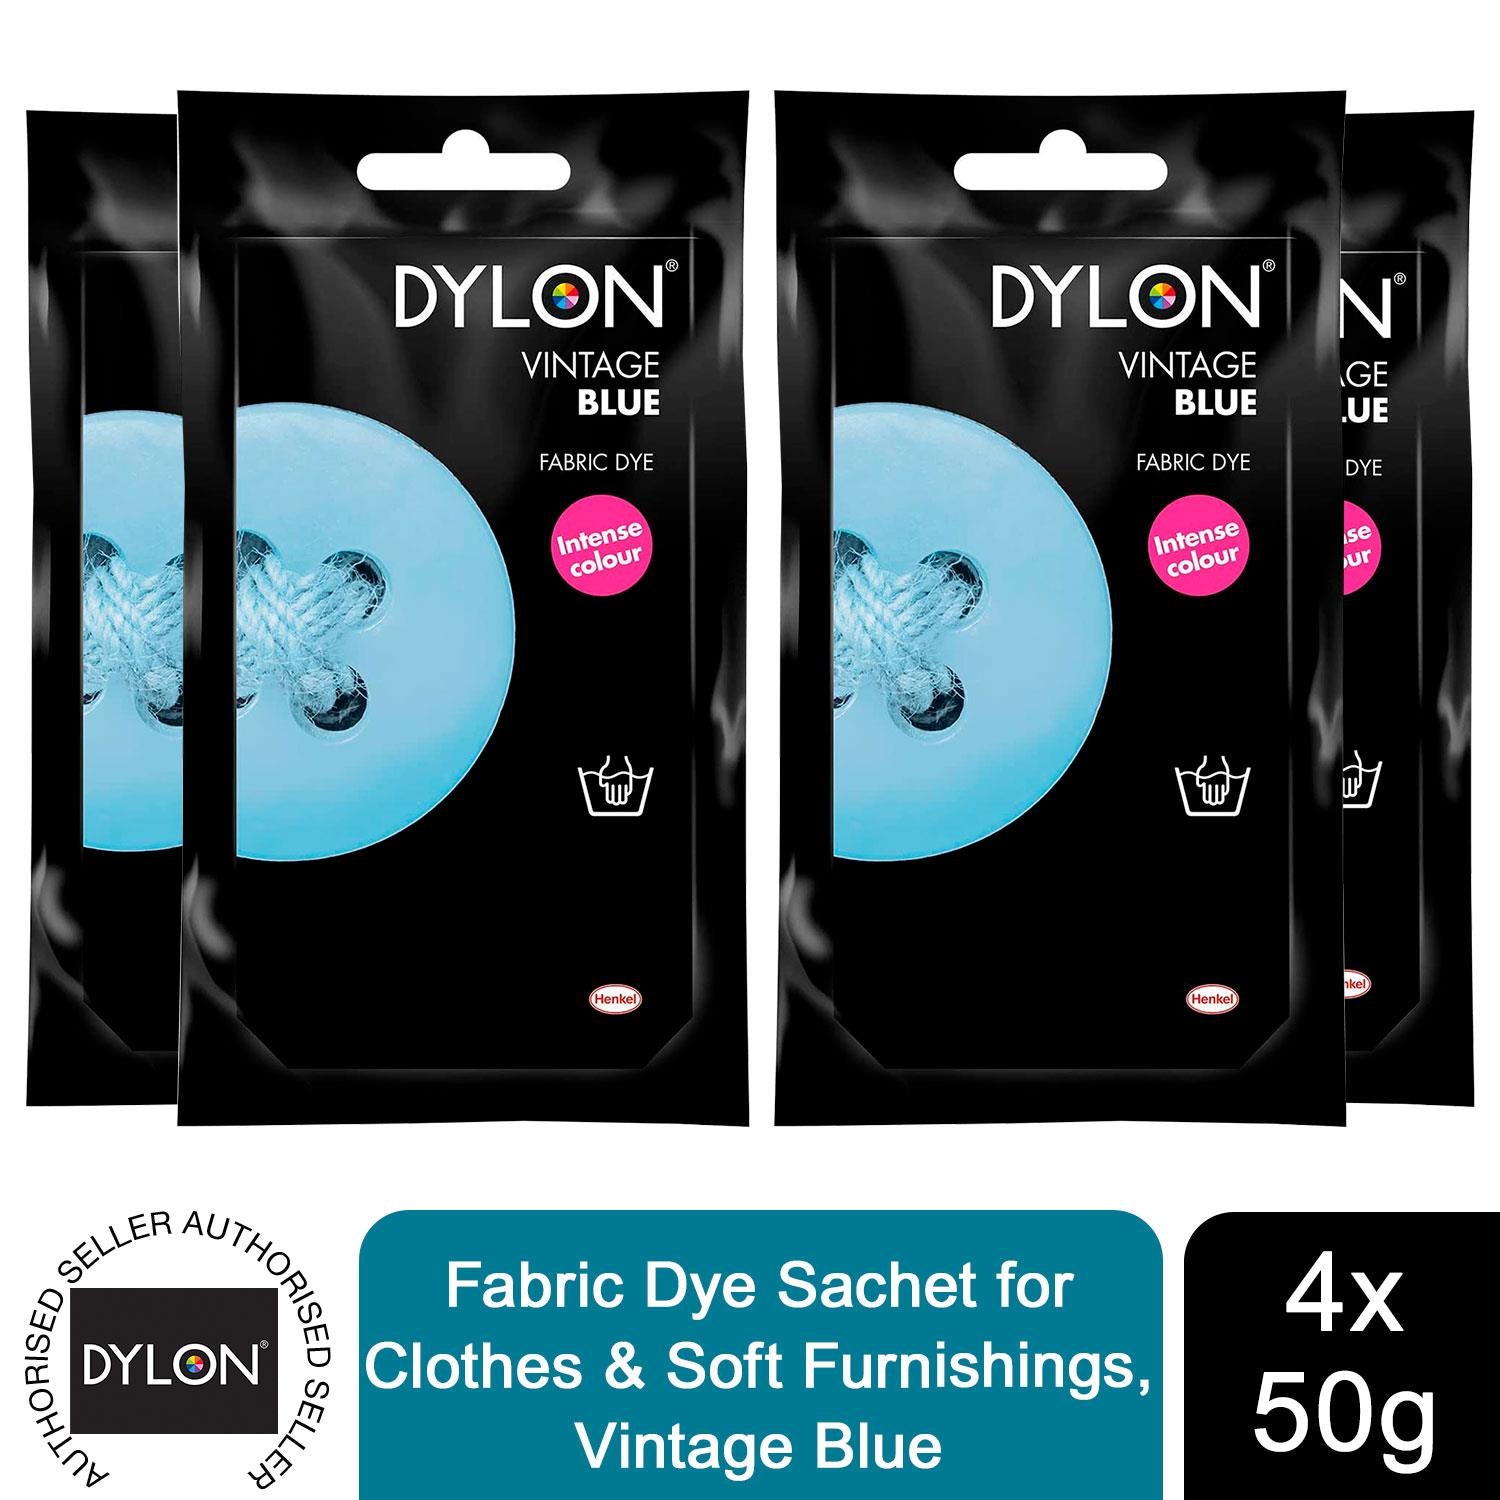 DYLON Hand Dye, Fabric Dye Sachet for Clothes, Soft Furnishings